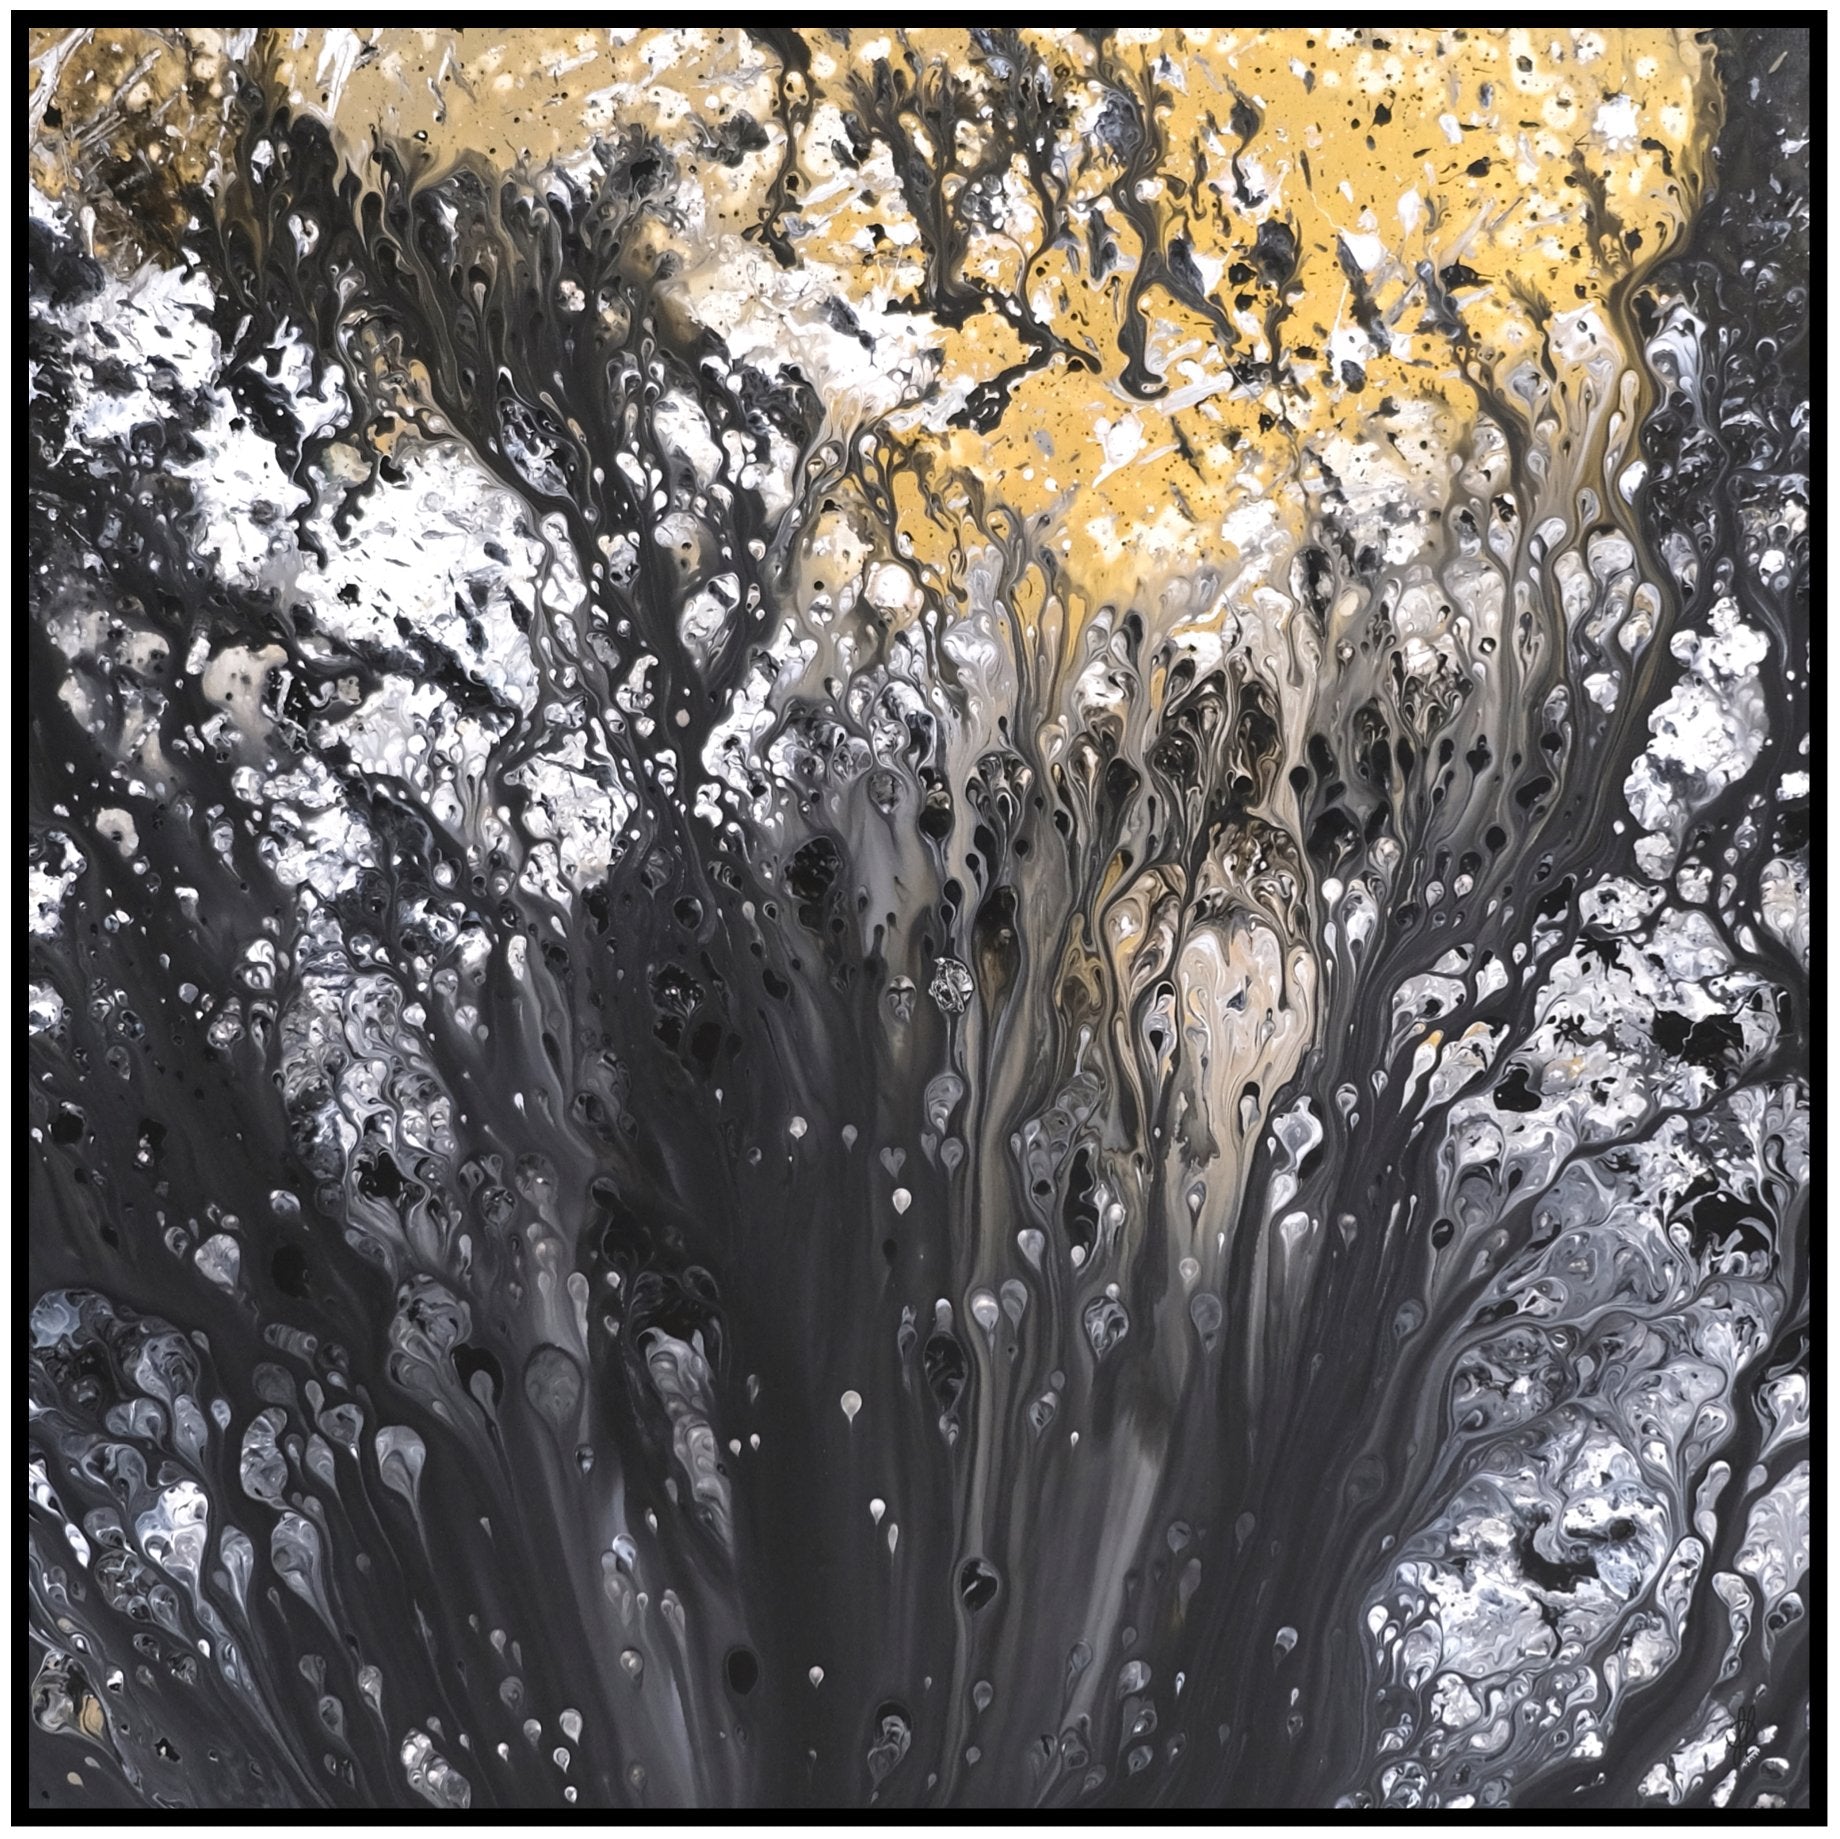 Canvas print: "Waterfall"